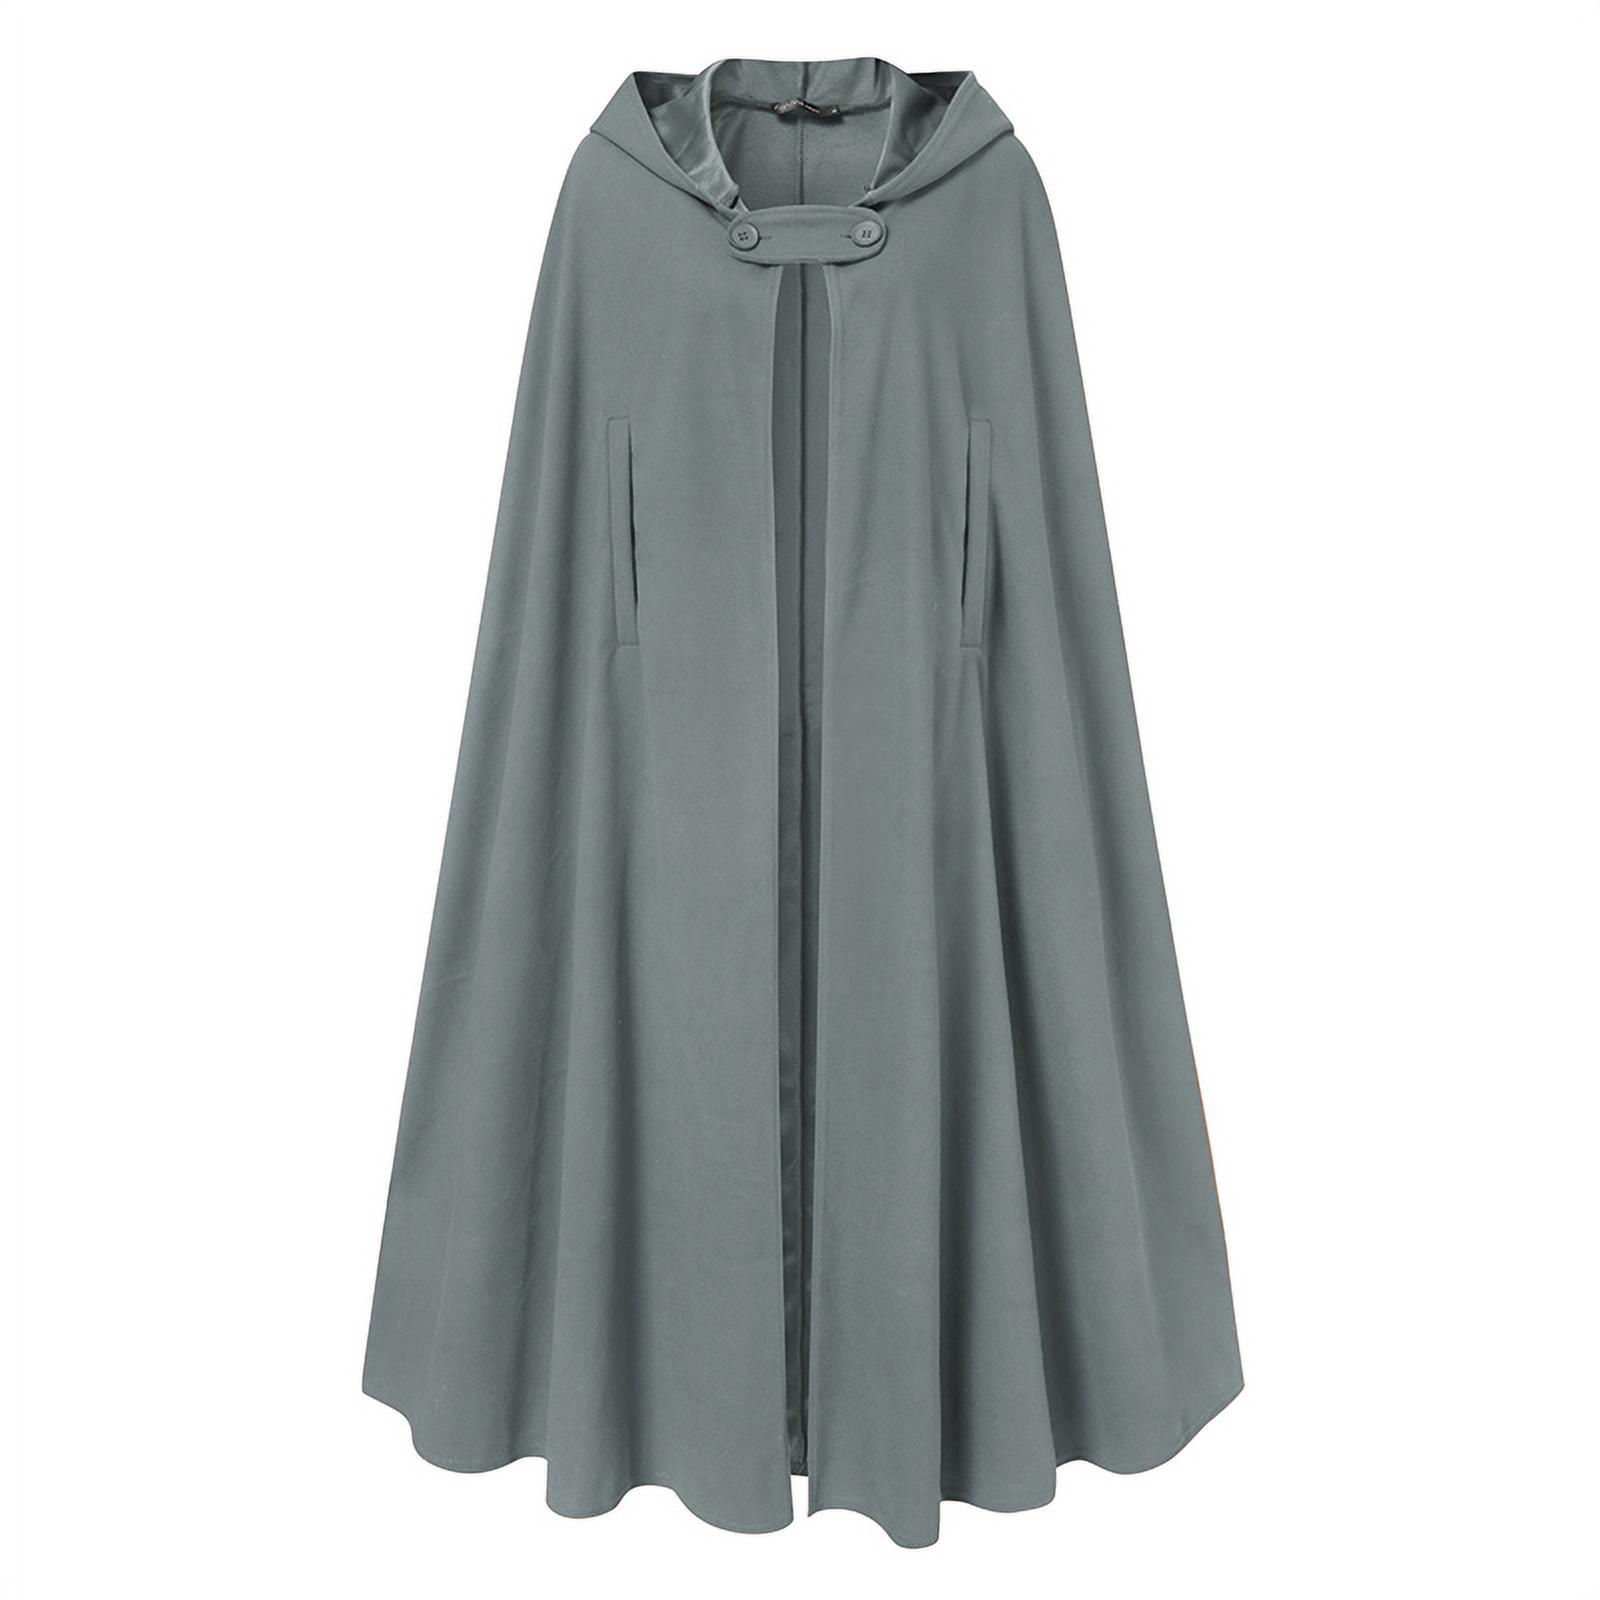 ZANZEA Women Full Sleeve Hoodies Cloak Cape Party Long Coat - image 3 of 4